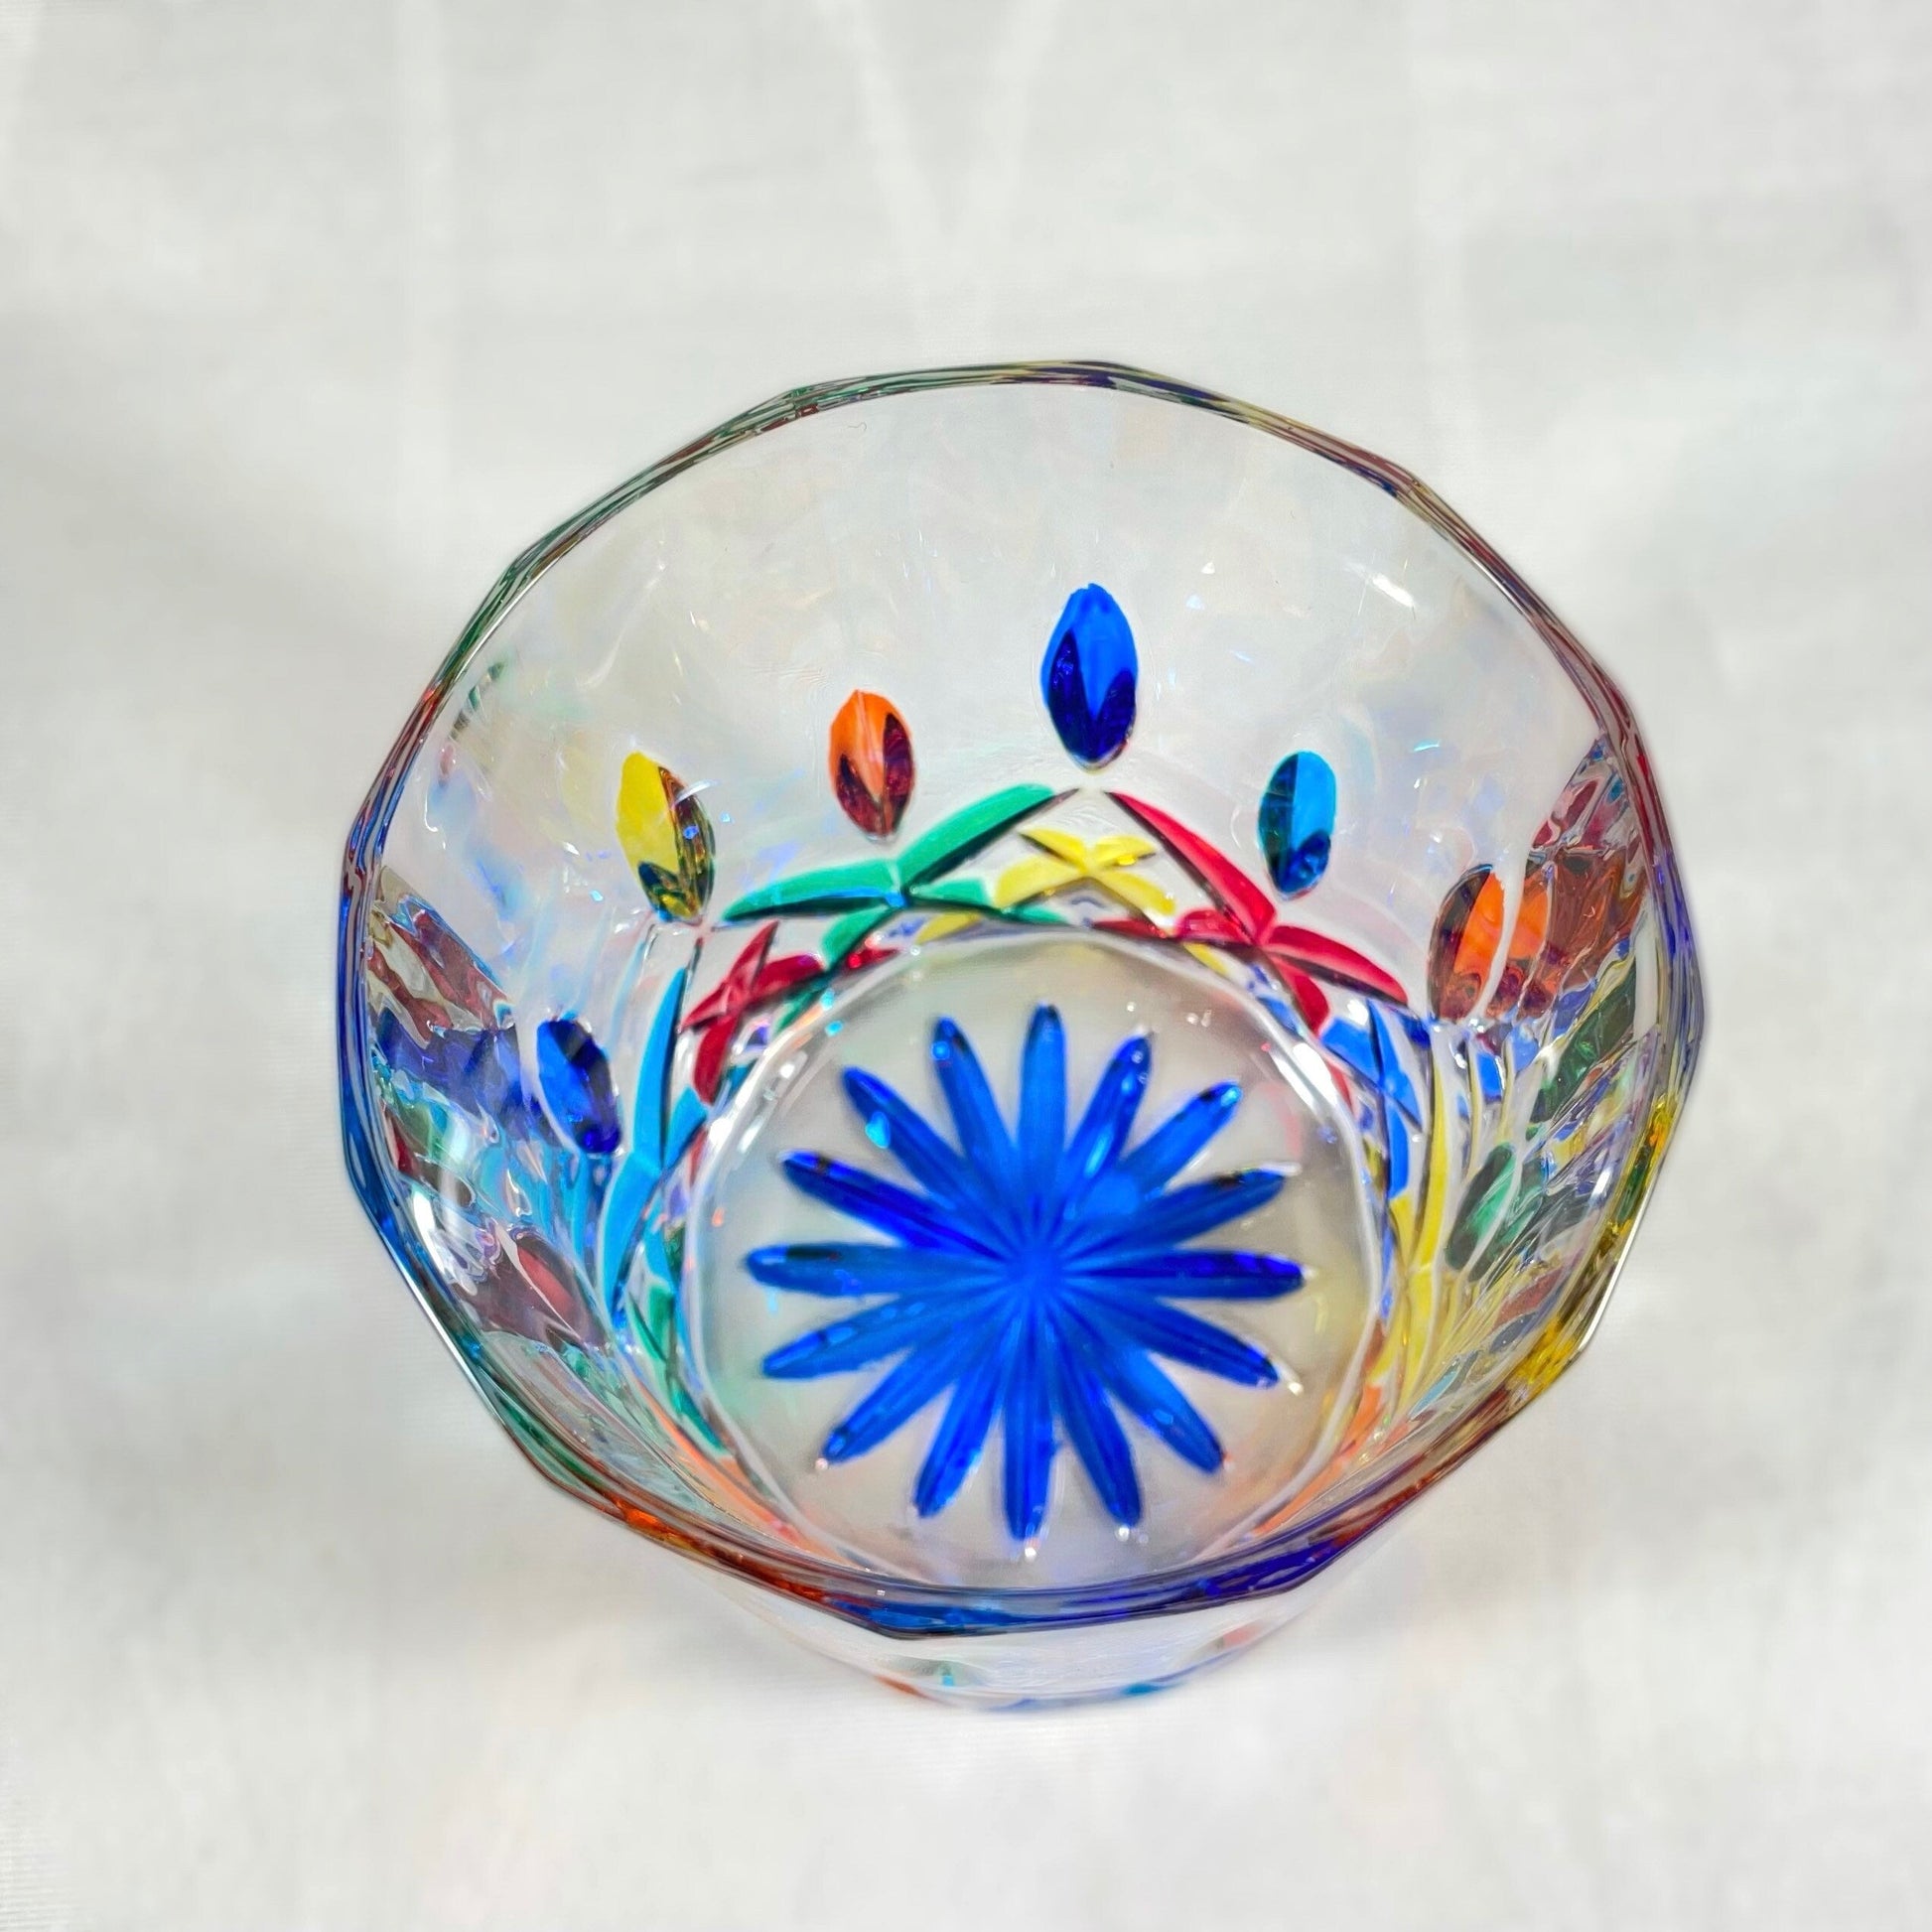 Venetian Glass Opera Tumbler - Handmade in Italy, Colorful Murano Glass